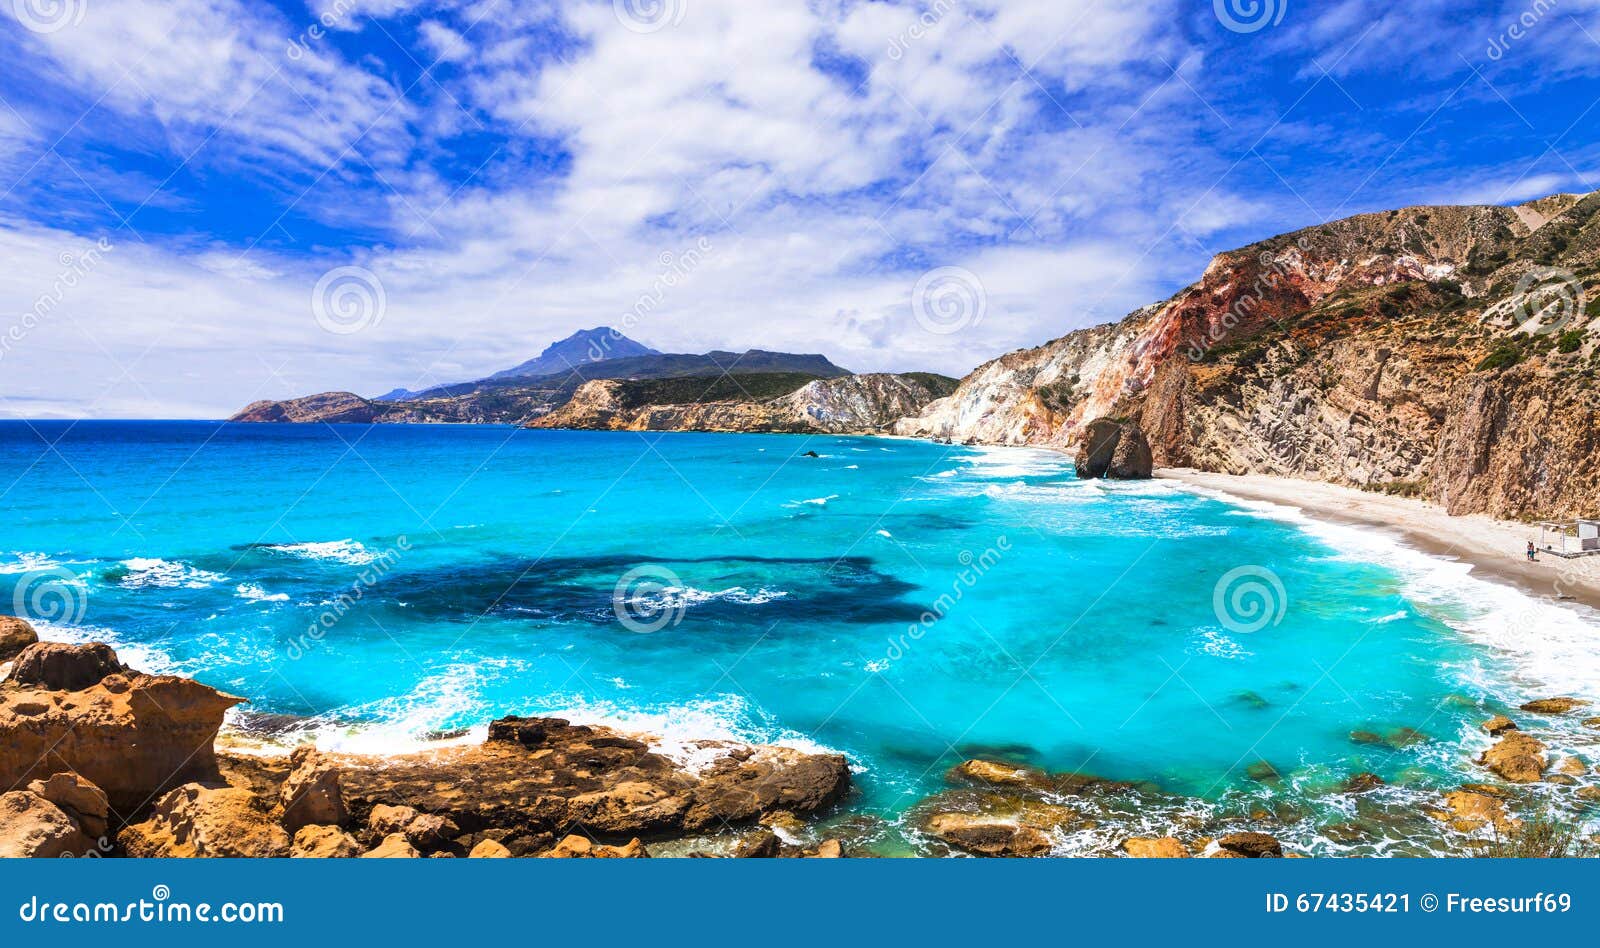 pictorial beaches of greece - firiplaka, milos island